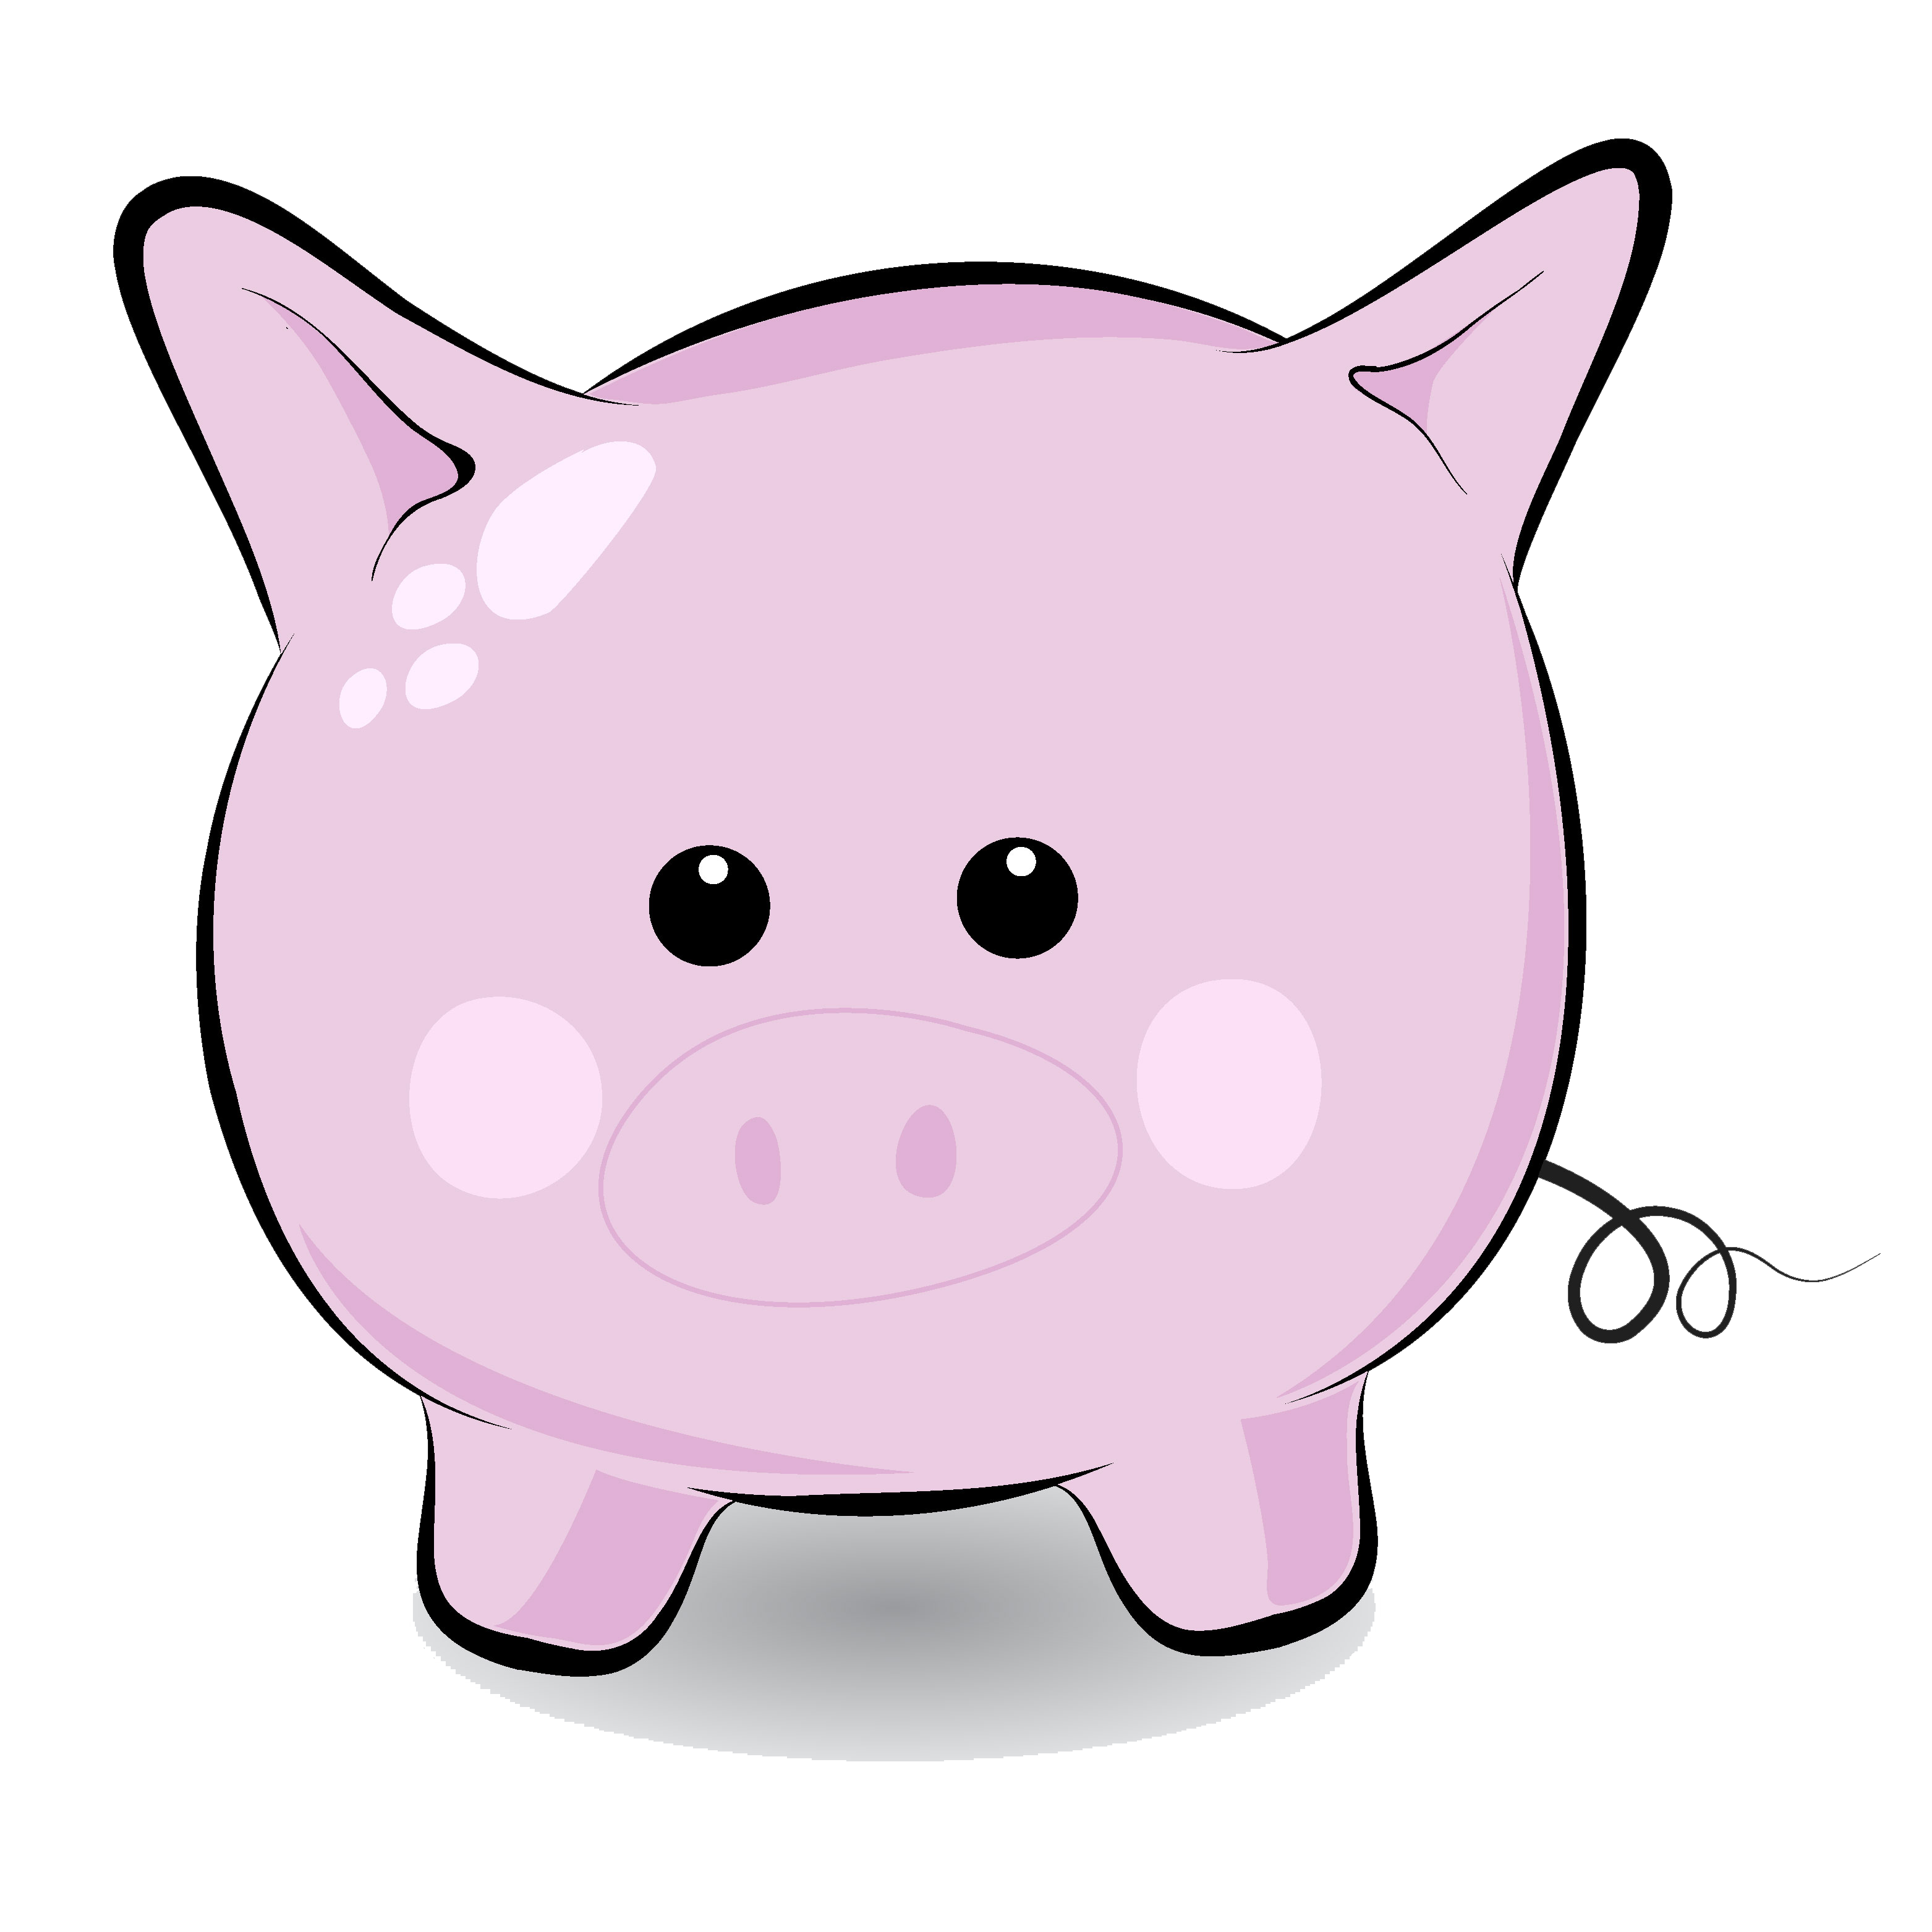 pig PNG image - Pig PNG